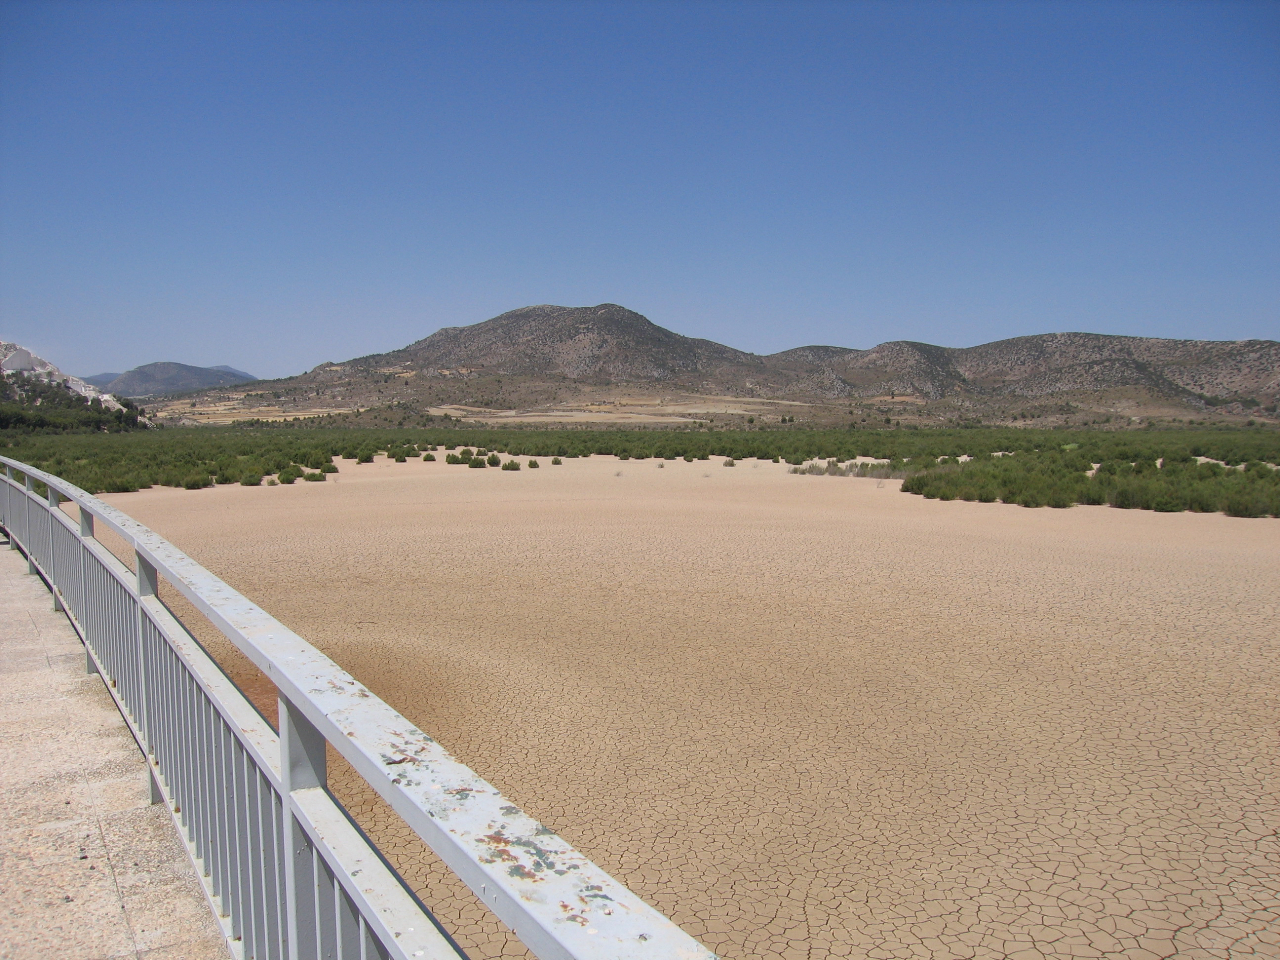 Val De Infierno dam during a drought event